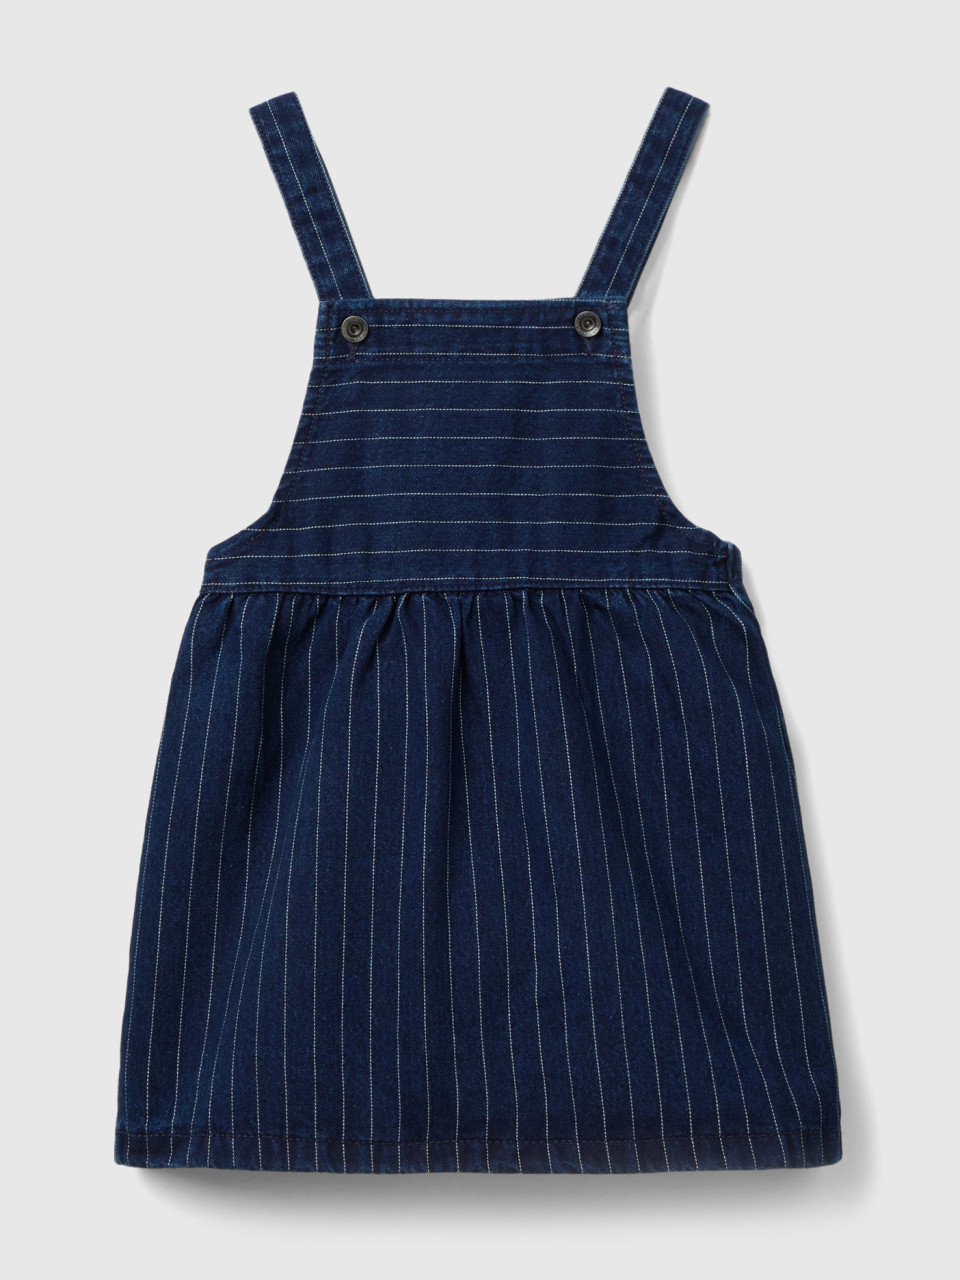 Benetton, Denim Overall Skirt With Pinstripes, Dark Blue, Kids